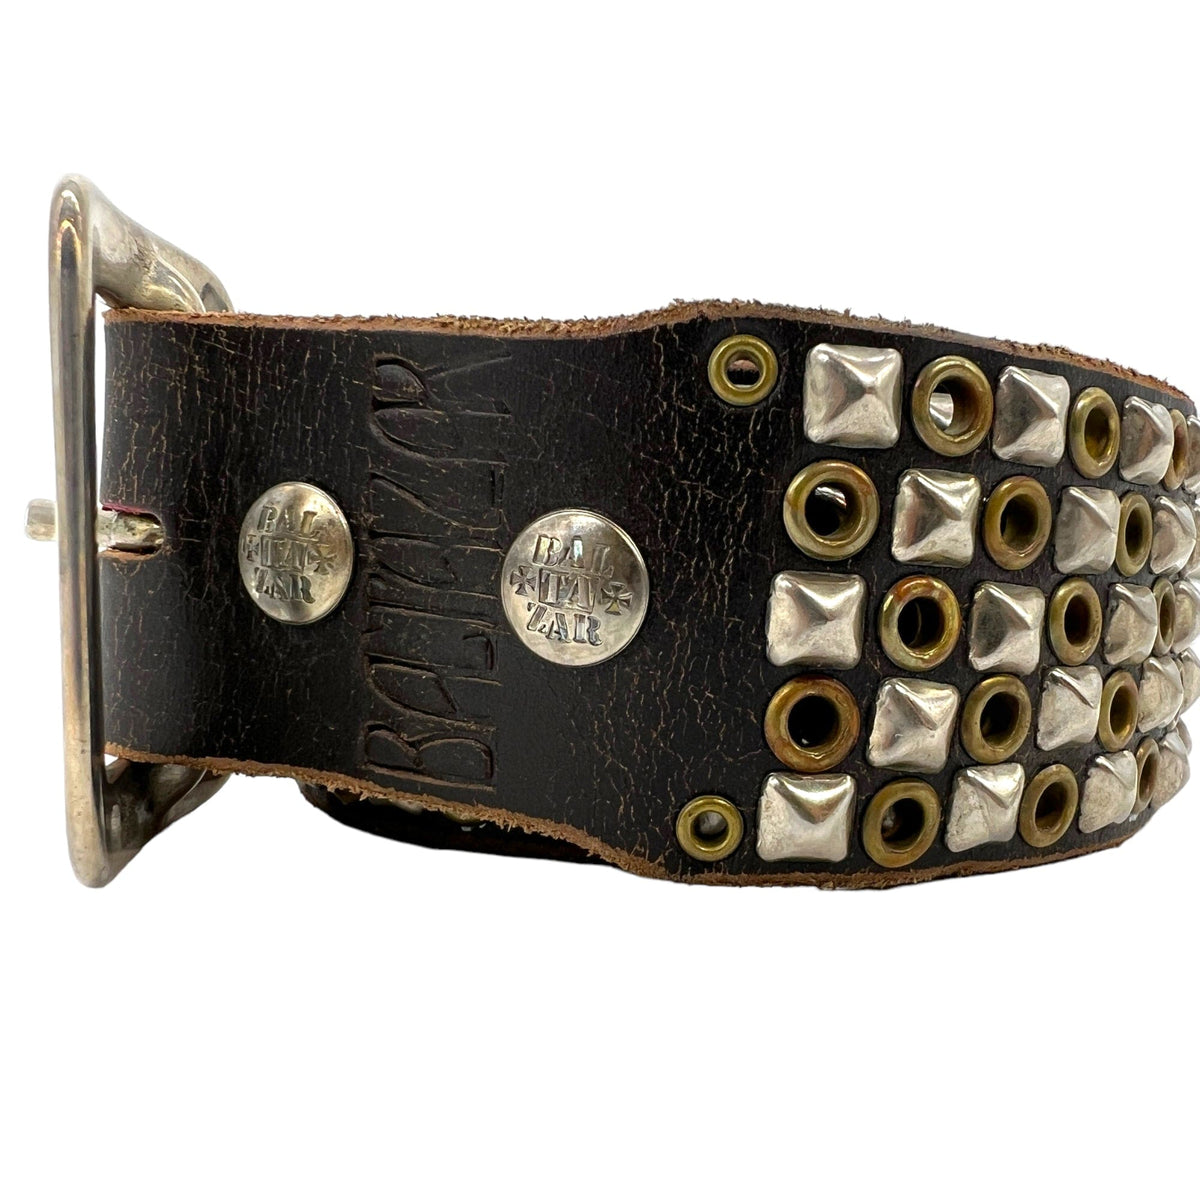 BALTAZAR Unisex Studded Leather Belt - Brown